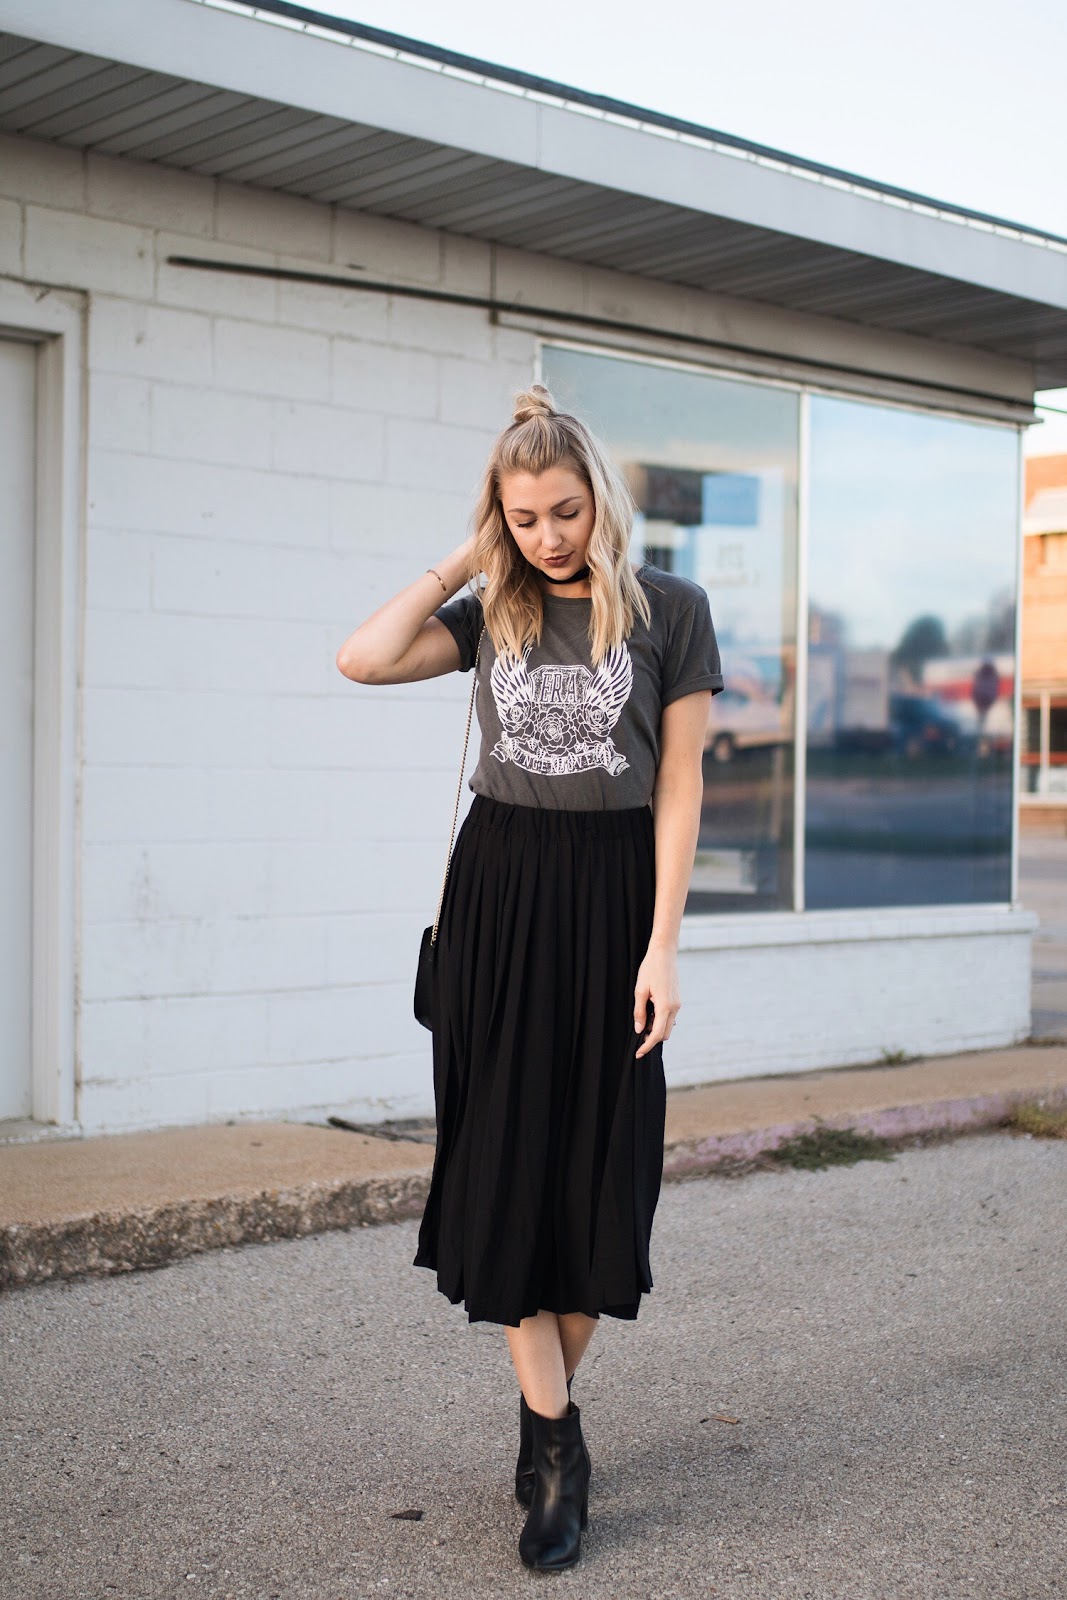 Black midi skirt styled casually